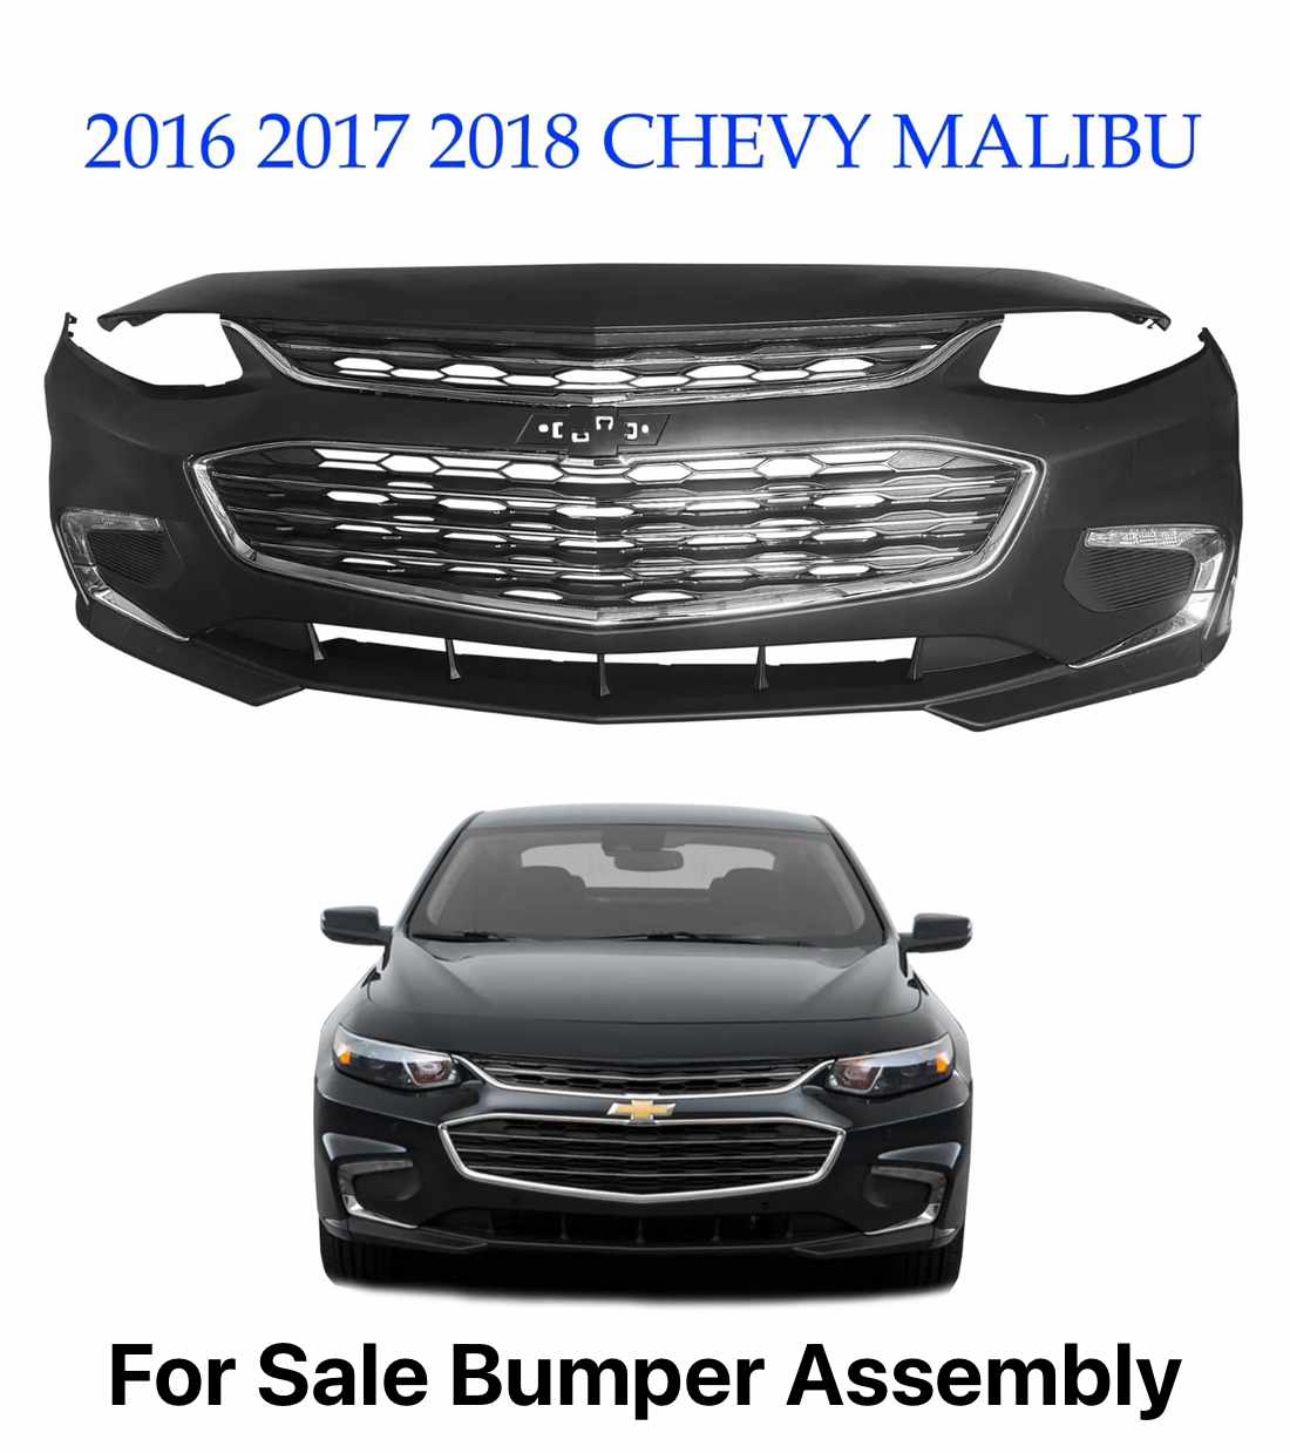 Chevy Malibu Front Bumper Assembly 